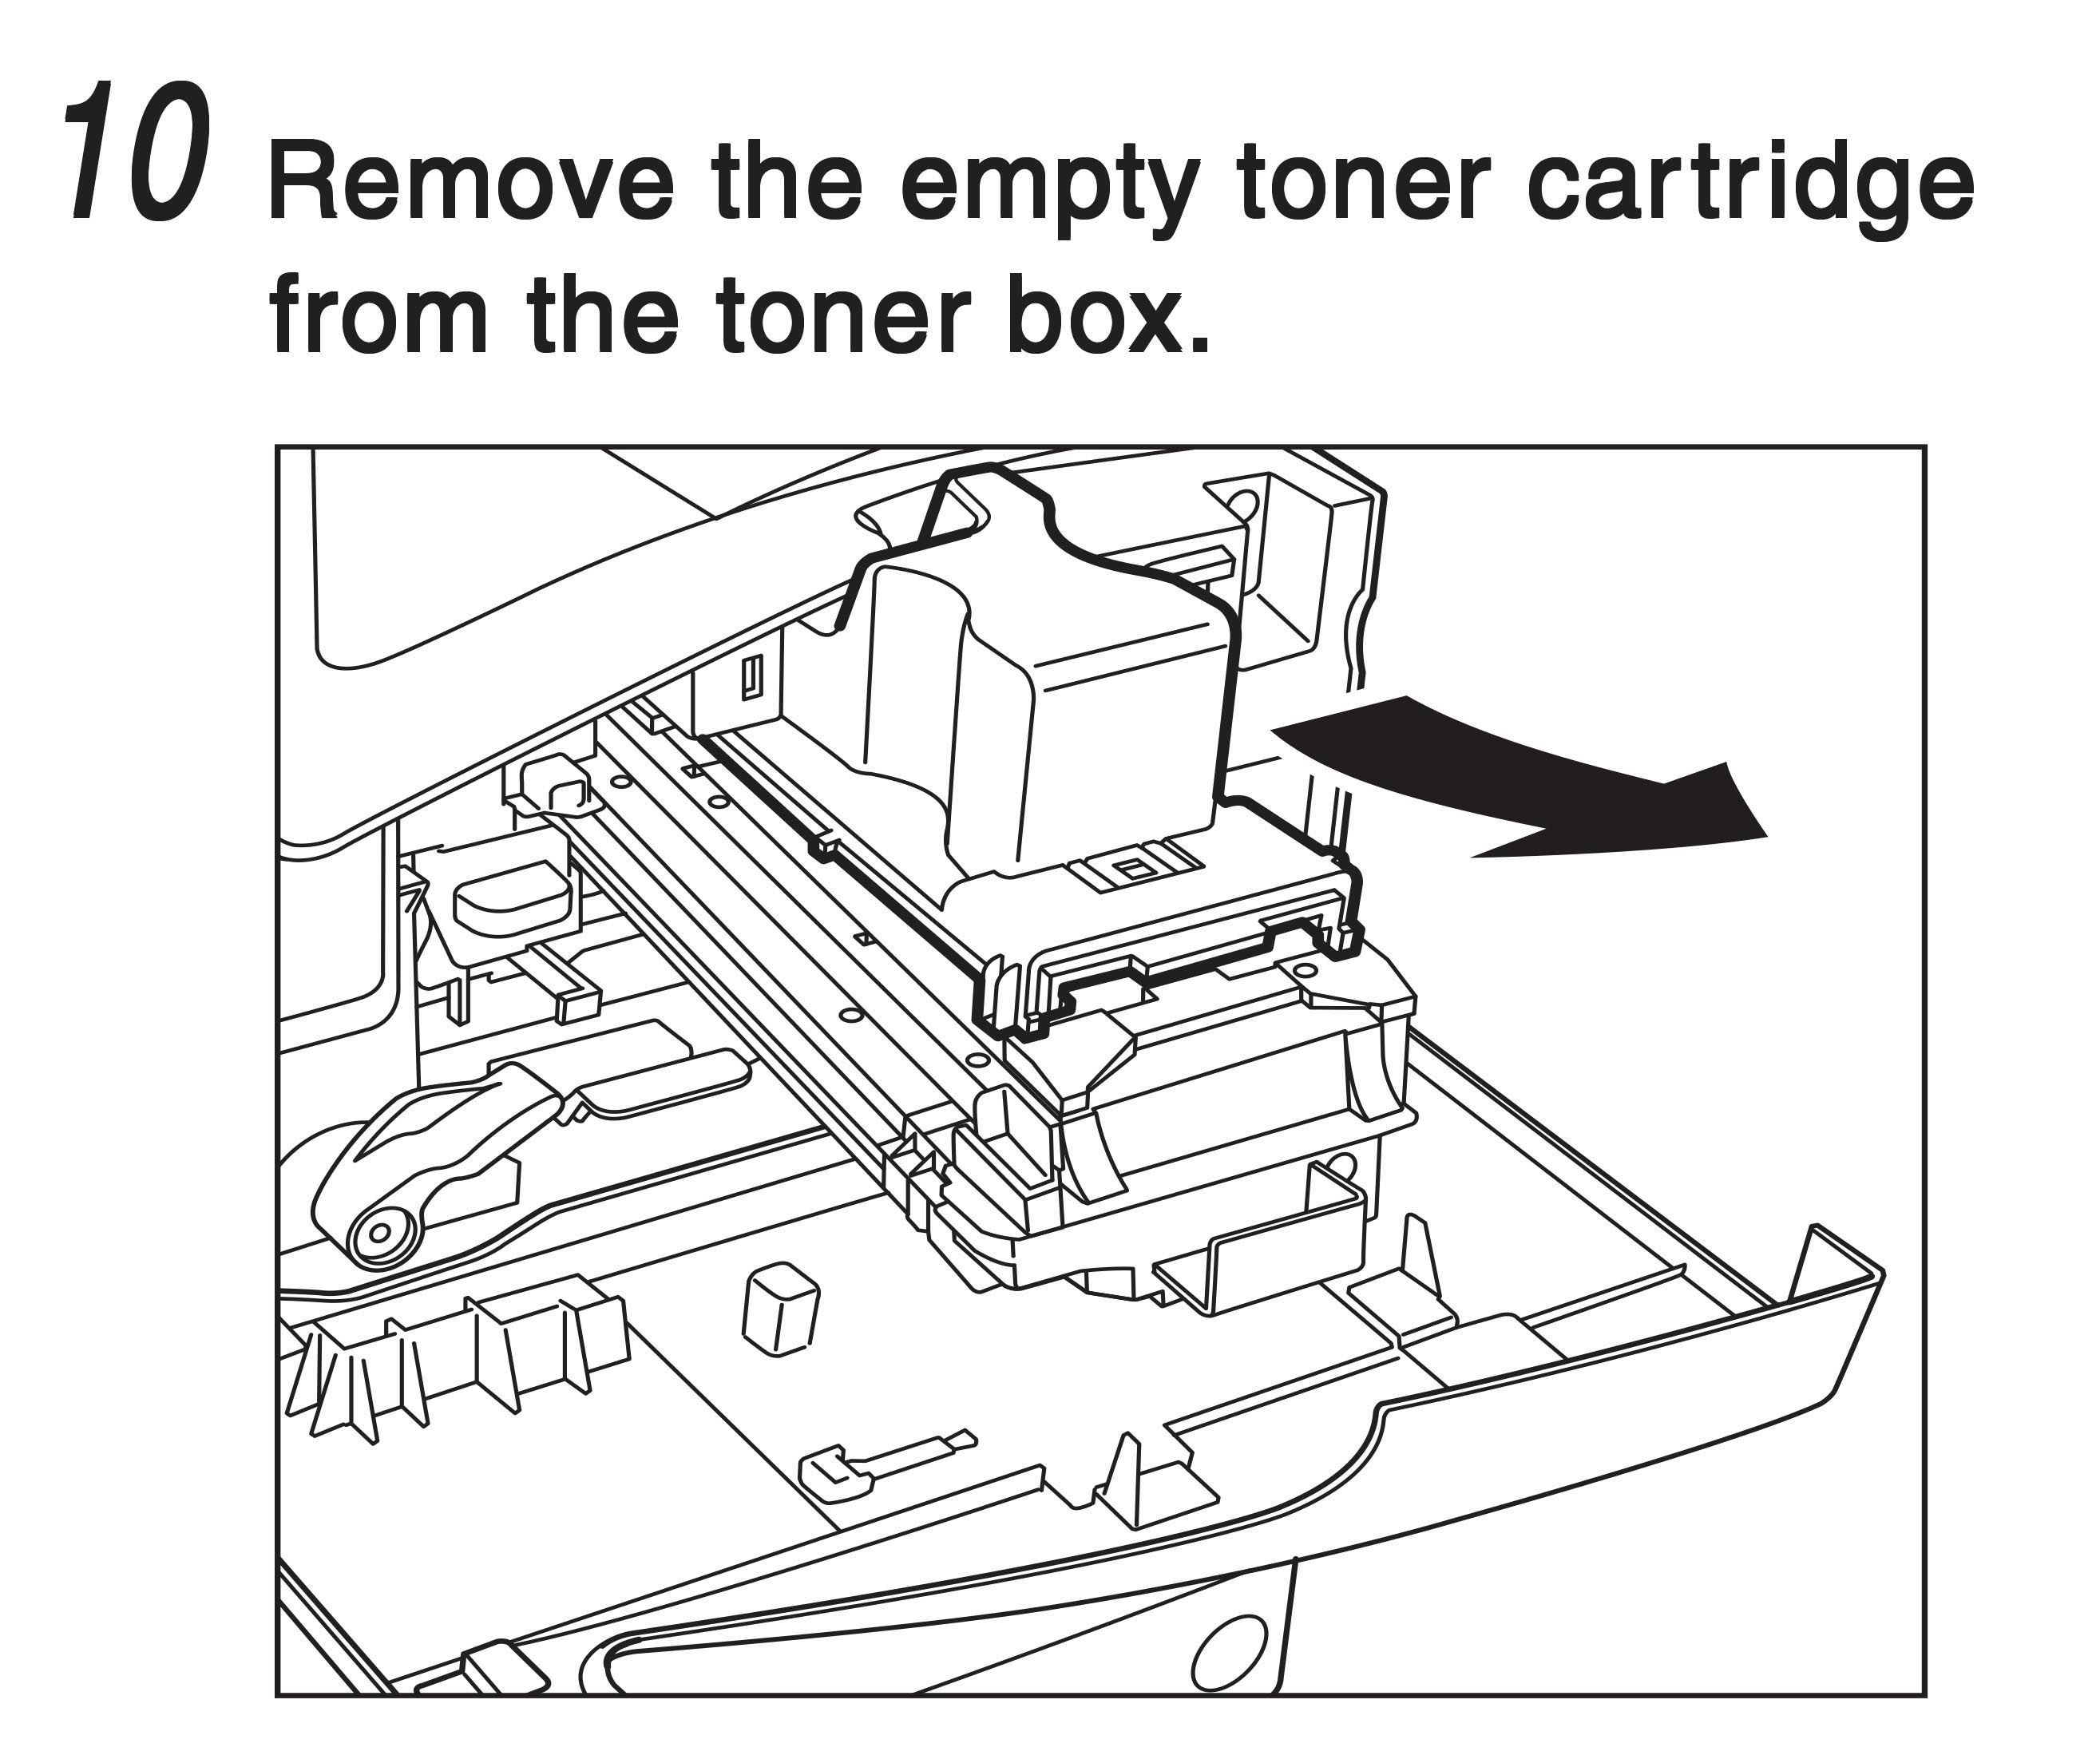 10. Remove the empty toner cartridge from the toner box.